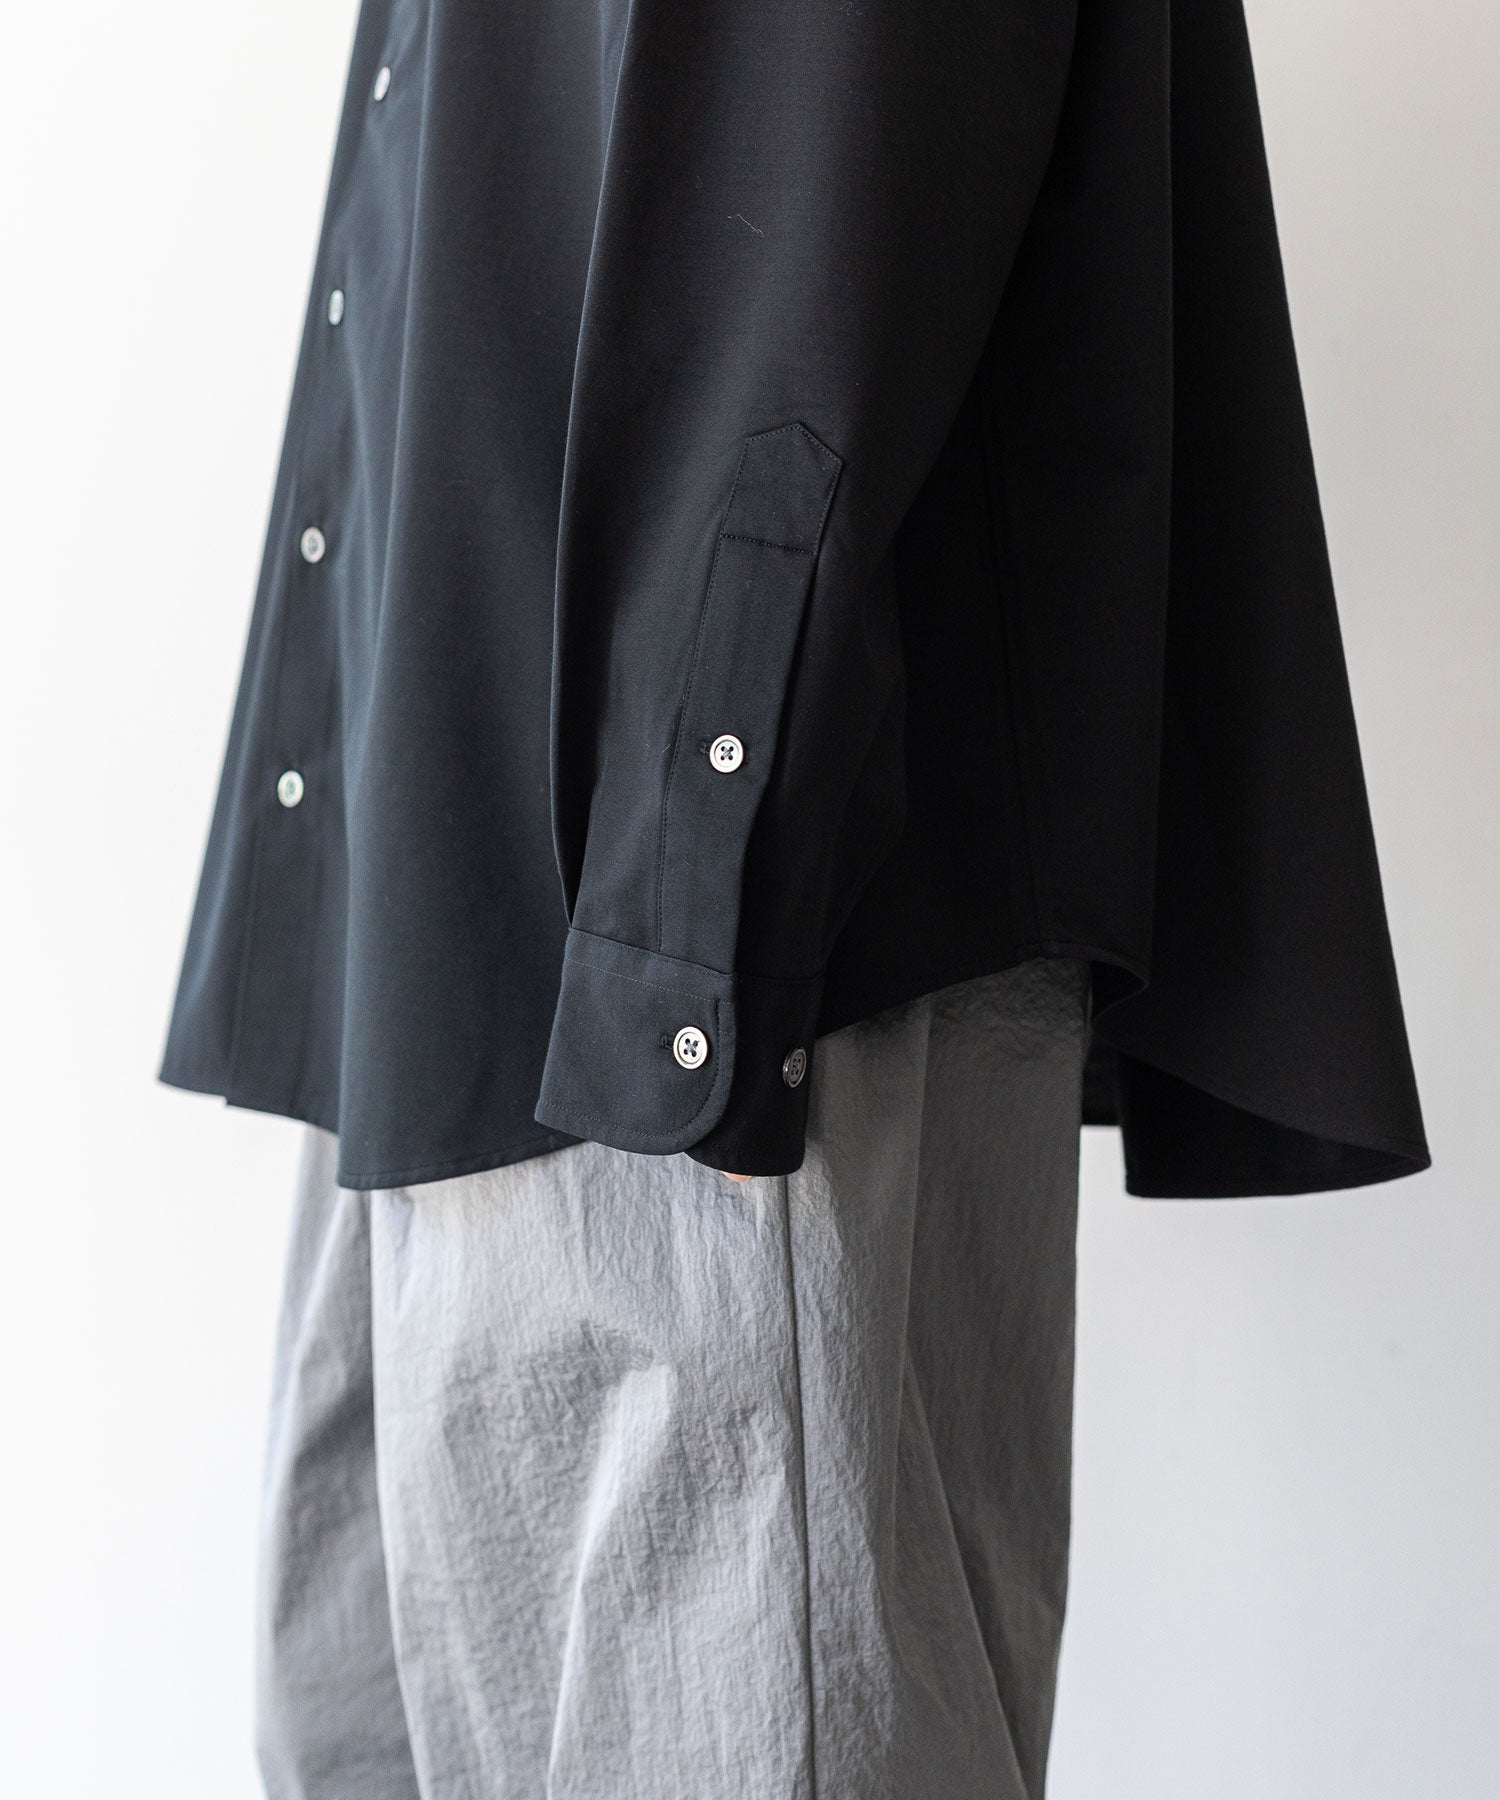 【KANEMASA PHIL.】カネマサのROYAL OX DRESS JERSEY SHIRT - BLACK 公式通販サイトsession福岡セレクトショップ